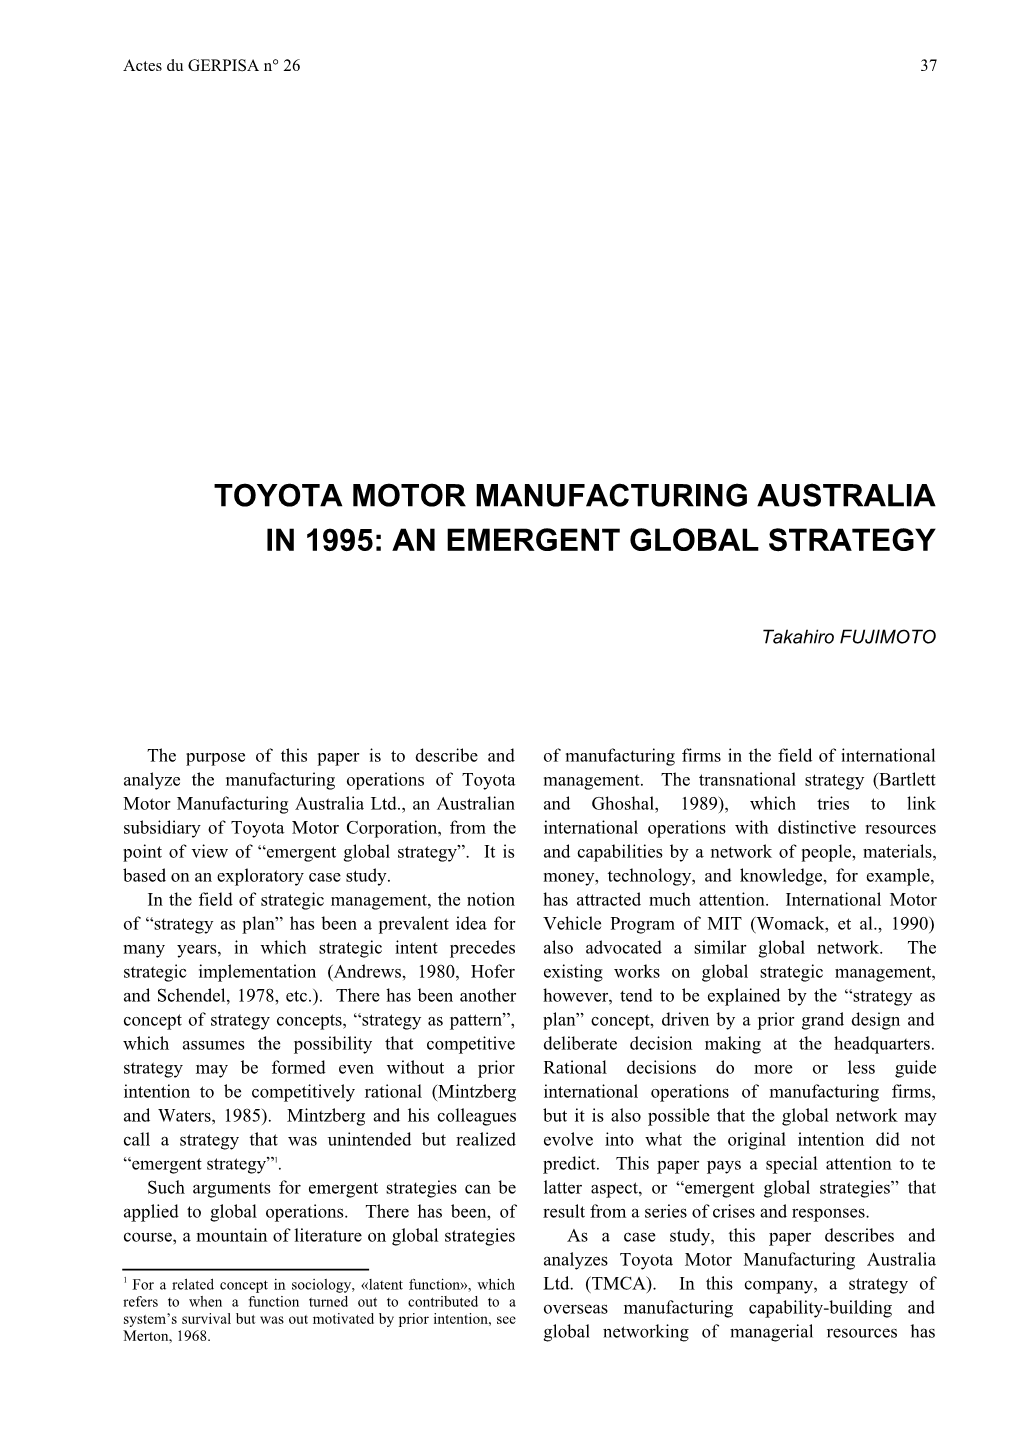 Toyota Motor Manufacturing Australia in 1995: an Emergent Global Strategy